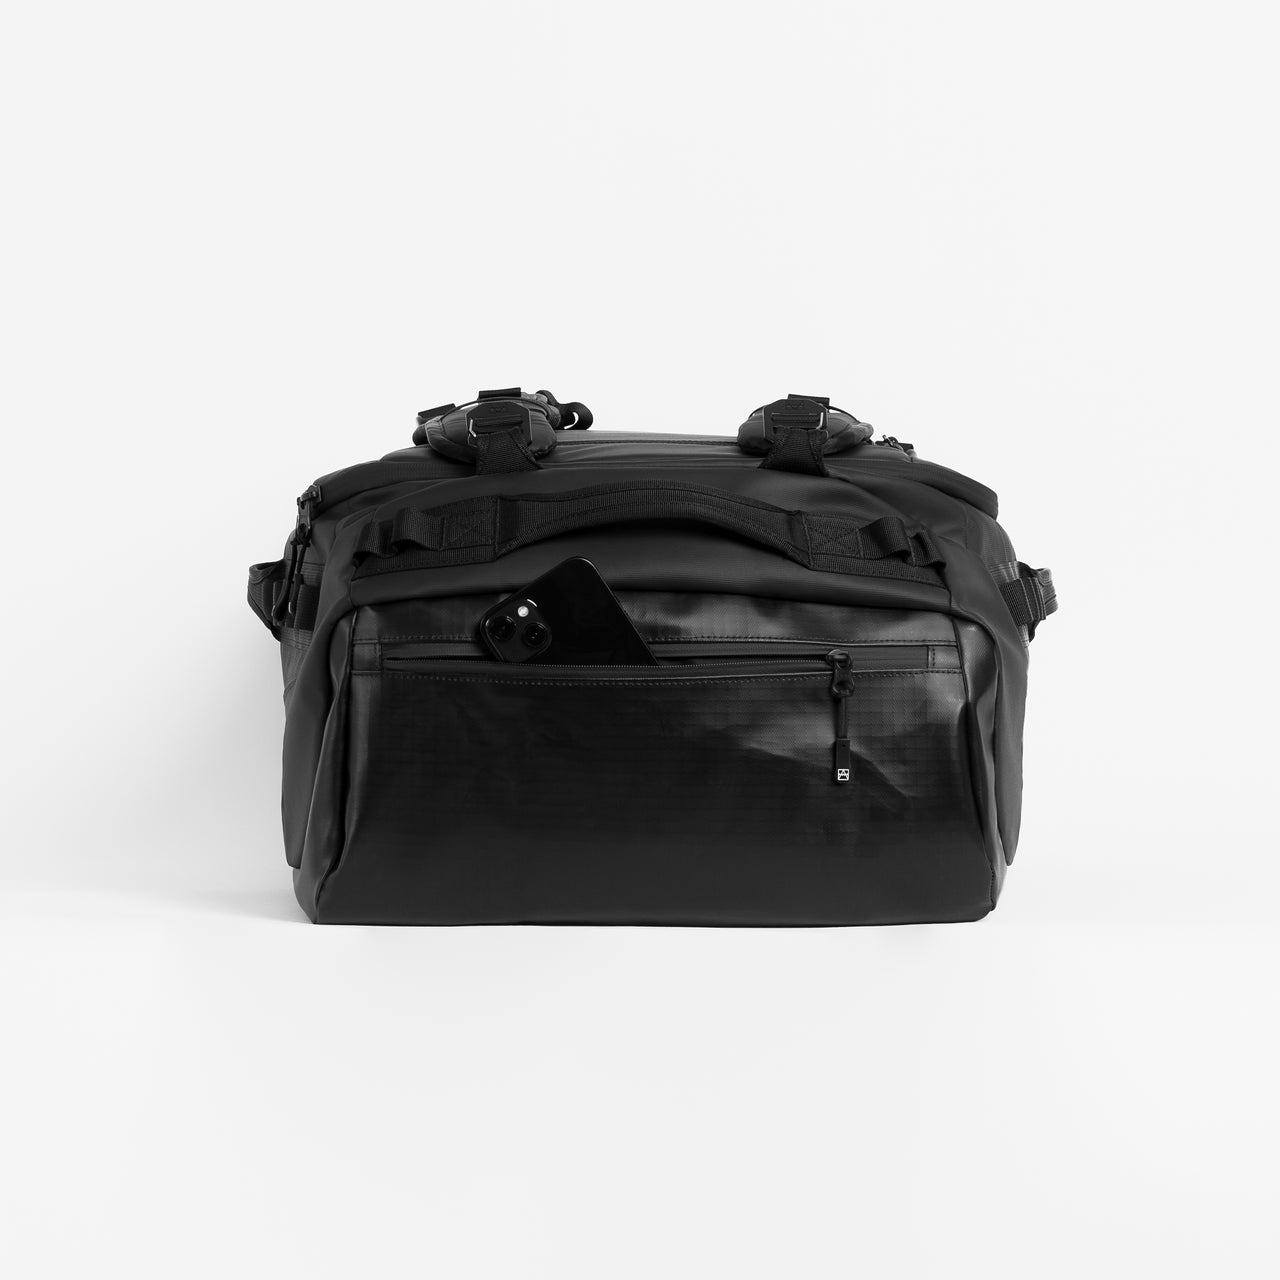 A studio shot of the phone pocket on an All Black Kit Bag 65L